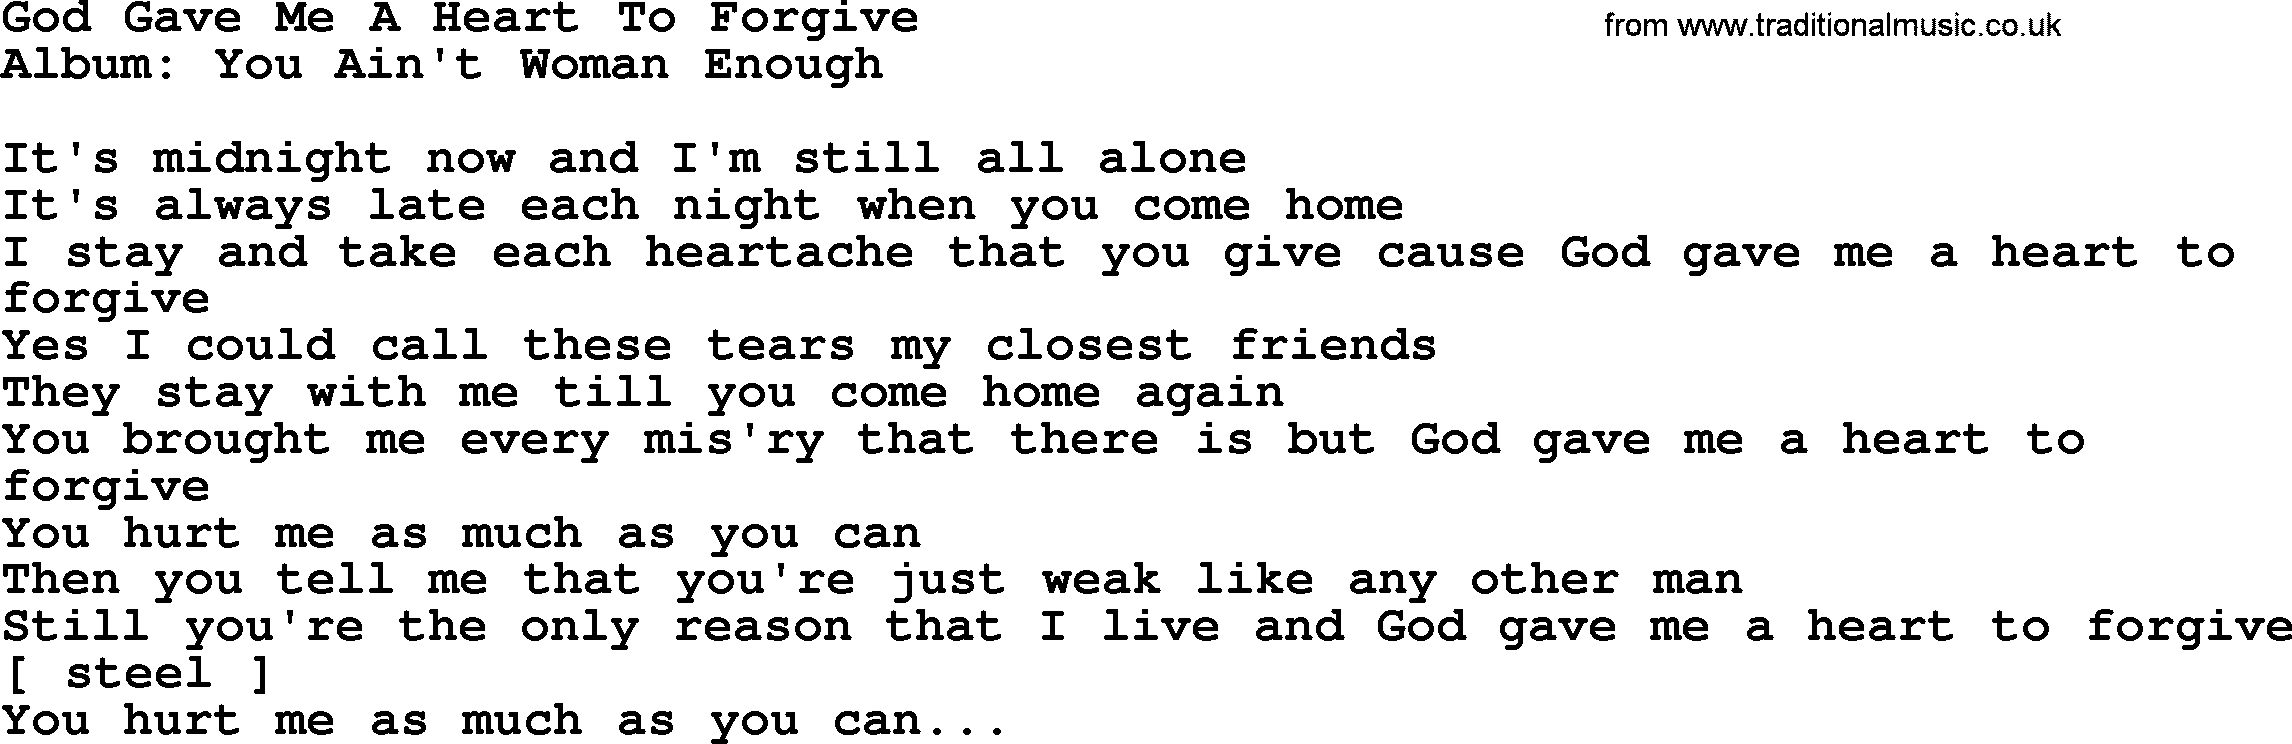 Loretta Lynn song: God Gave Me A Heart To Forgive lyrics